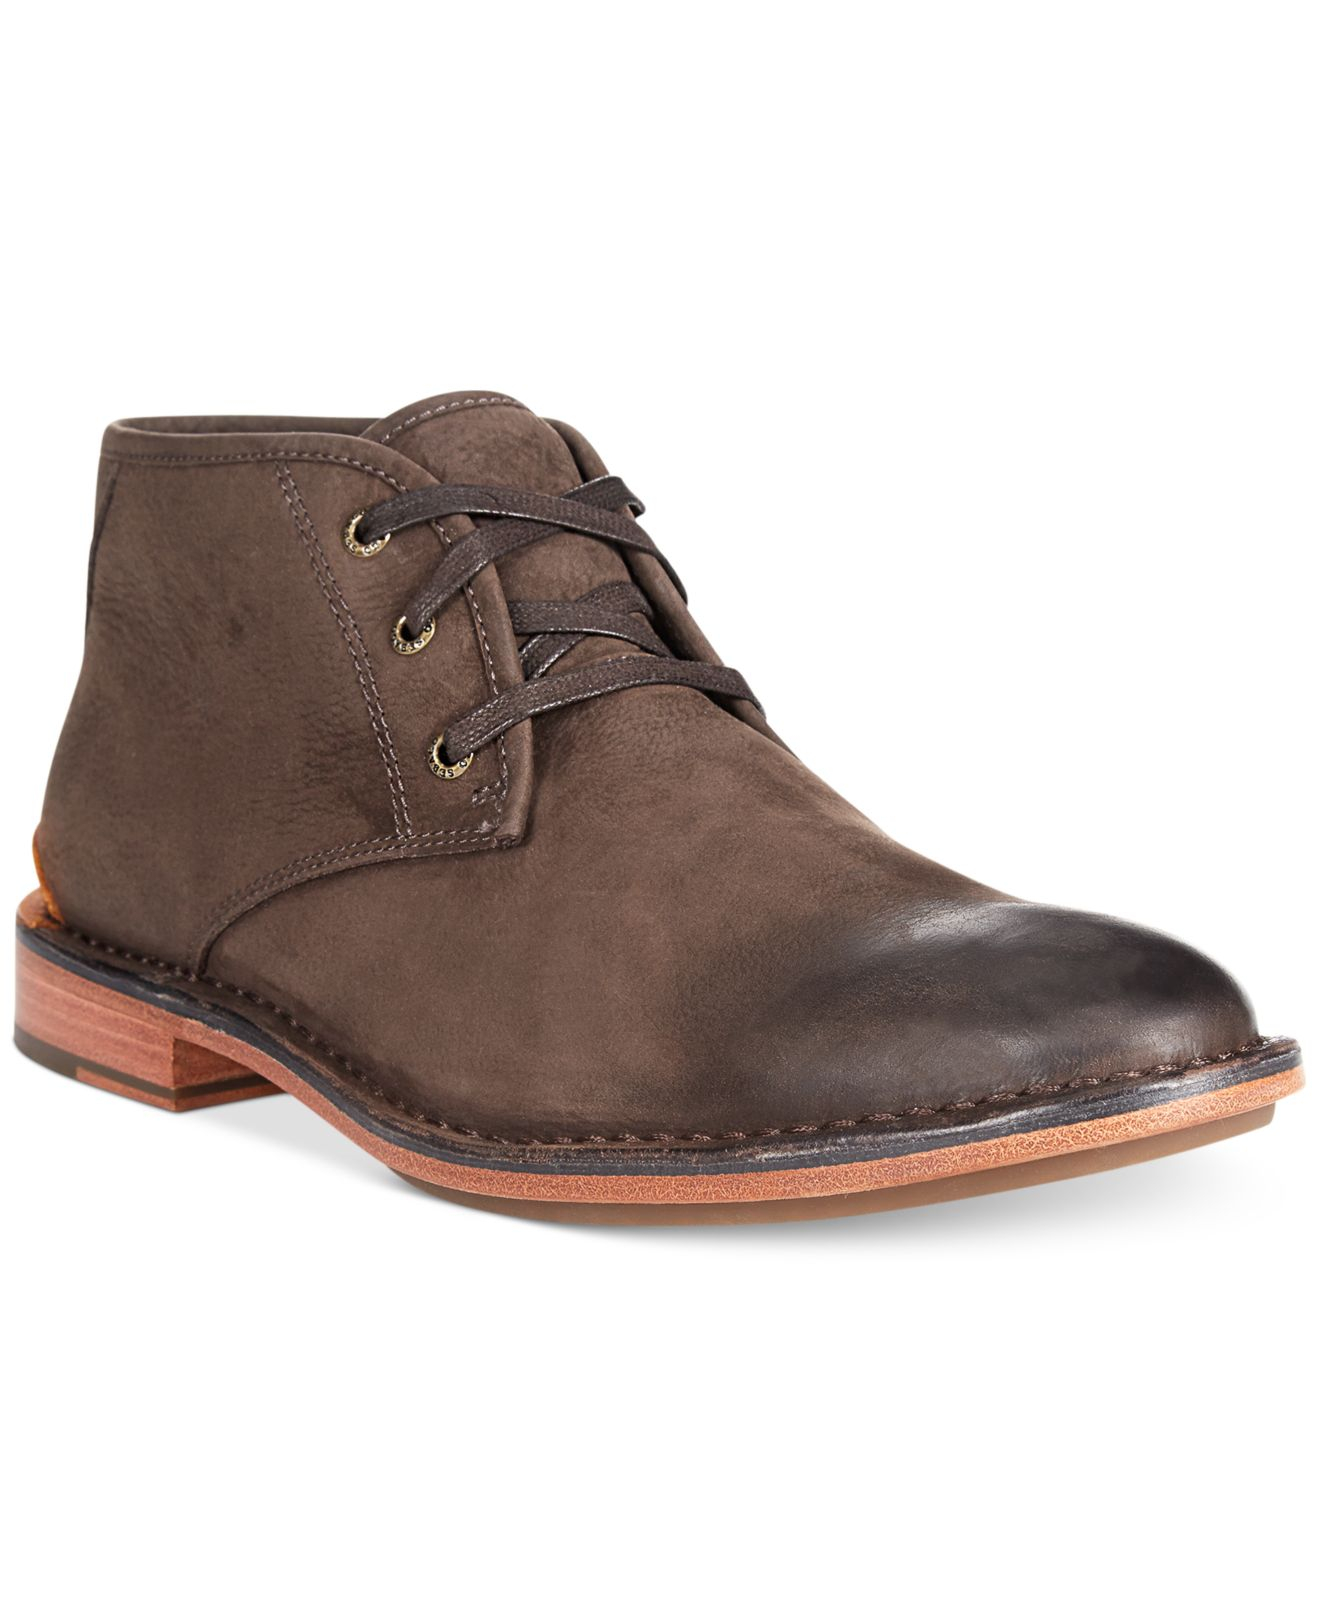 Sebago Halyard Chukka Boots in Brown Nubuck (Brown) for Men - Lyst